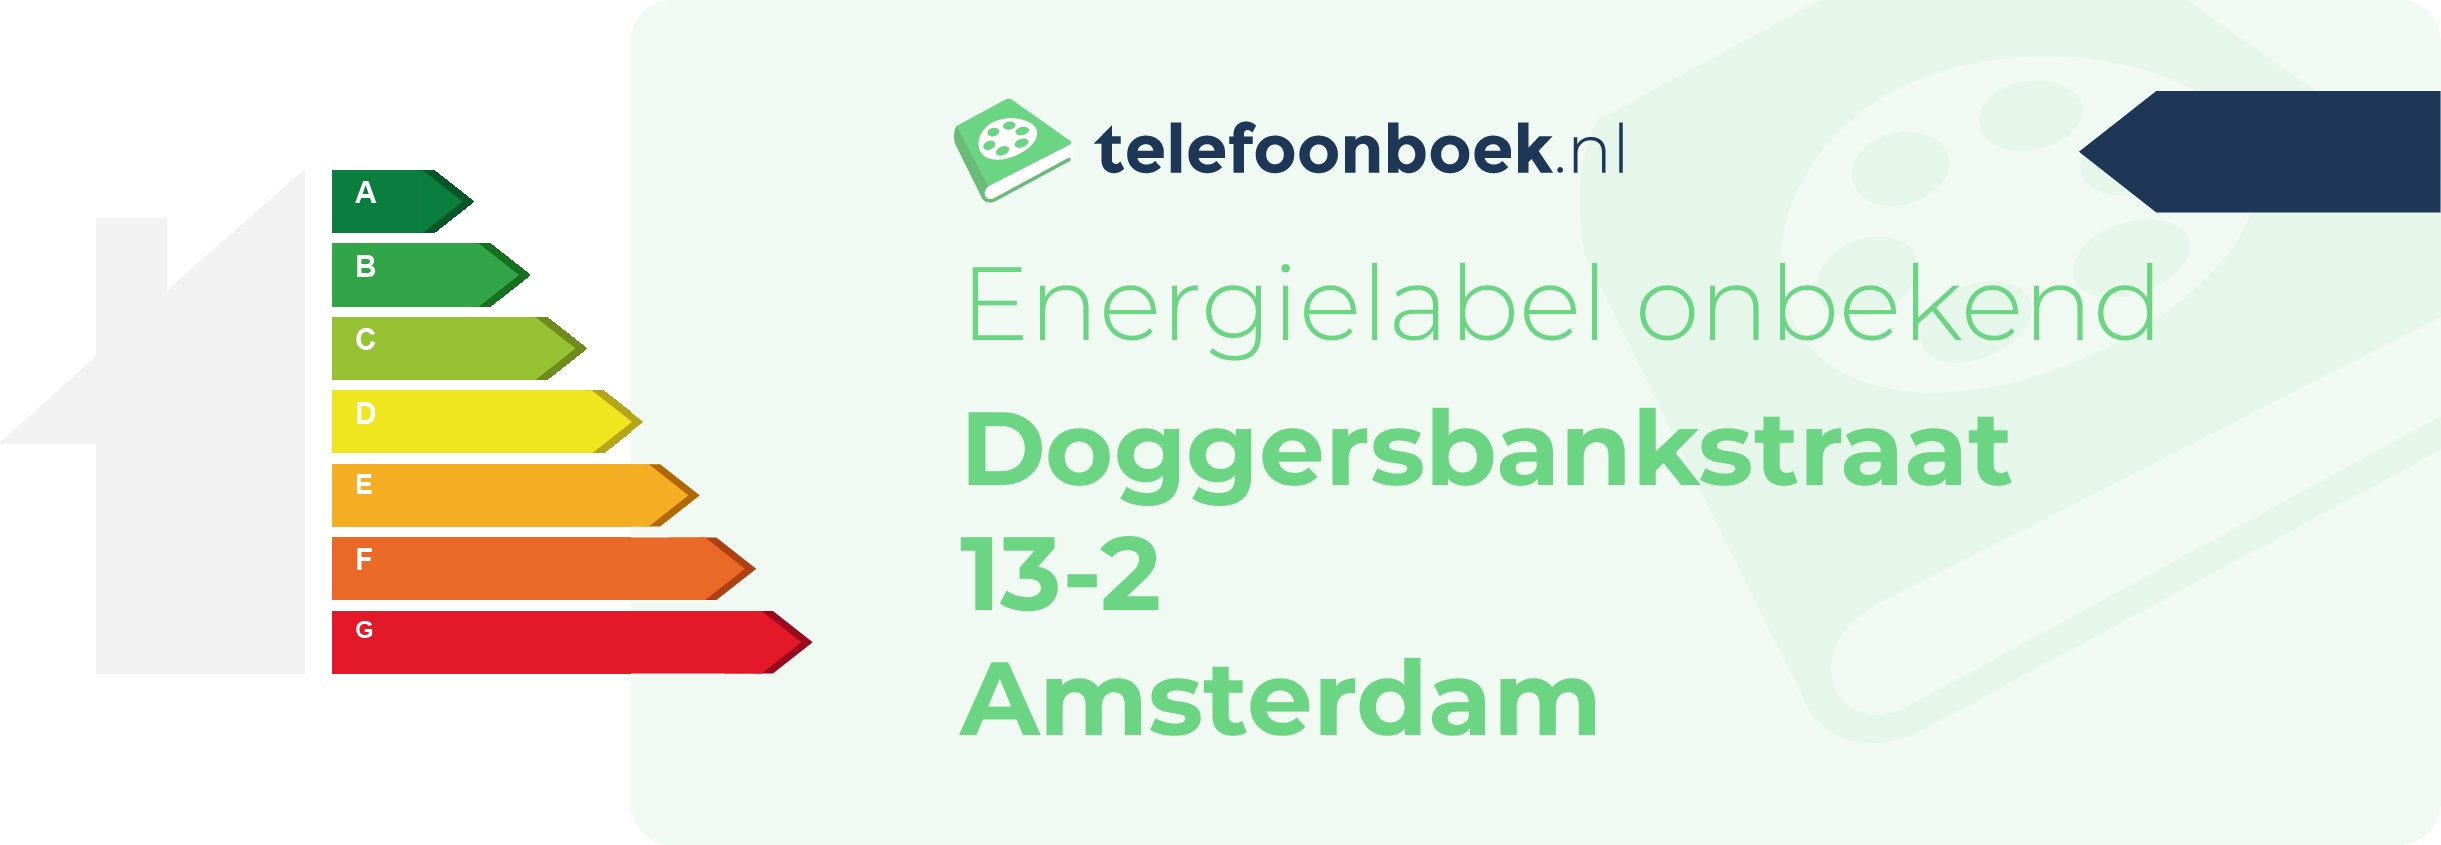 Energielabel Doggersbankstraat 13-2 Amsterdam